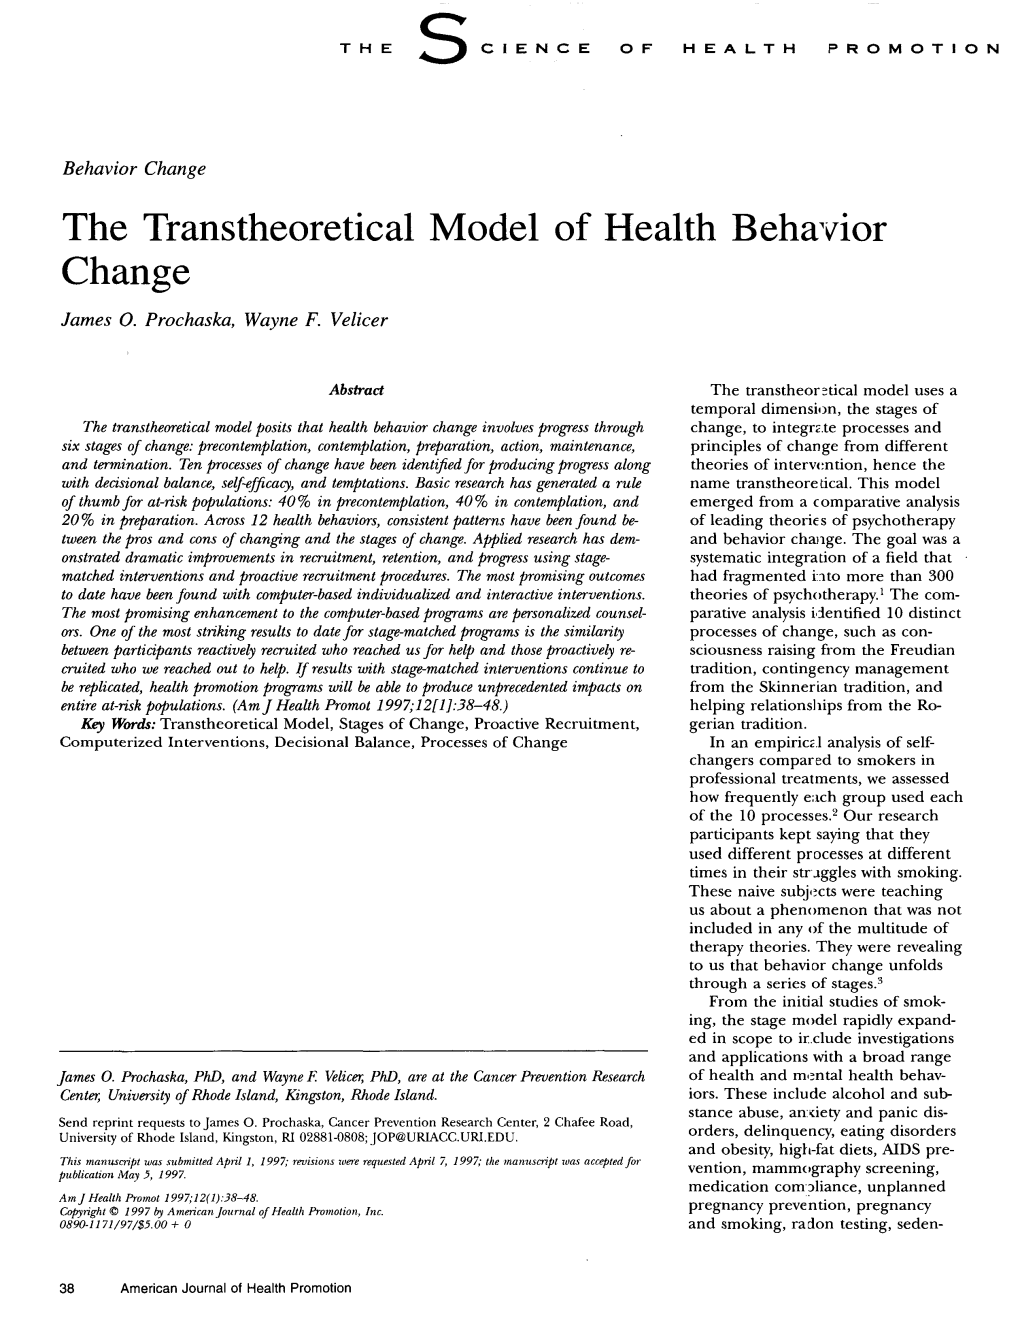 The Transtheoretical Model of Health Behavior Change